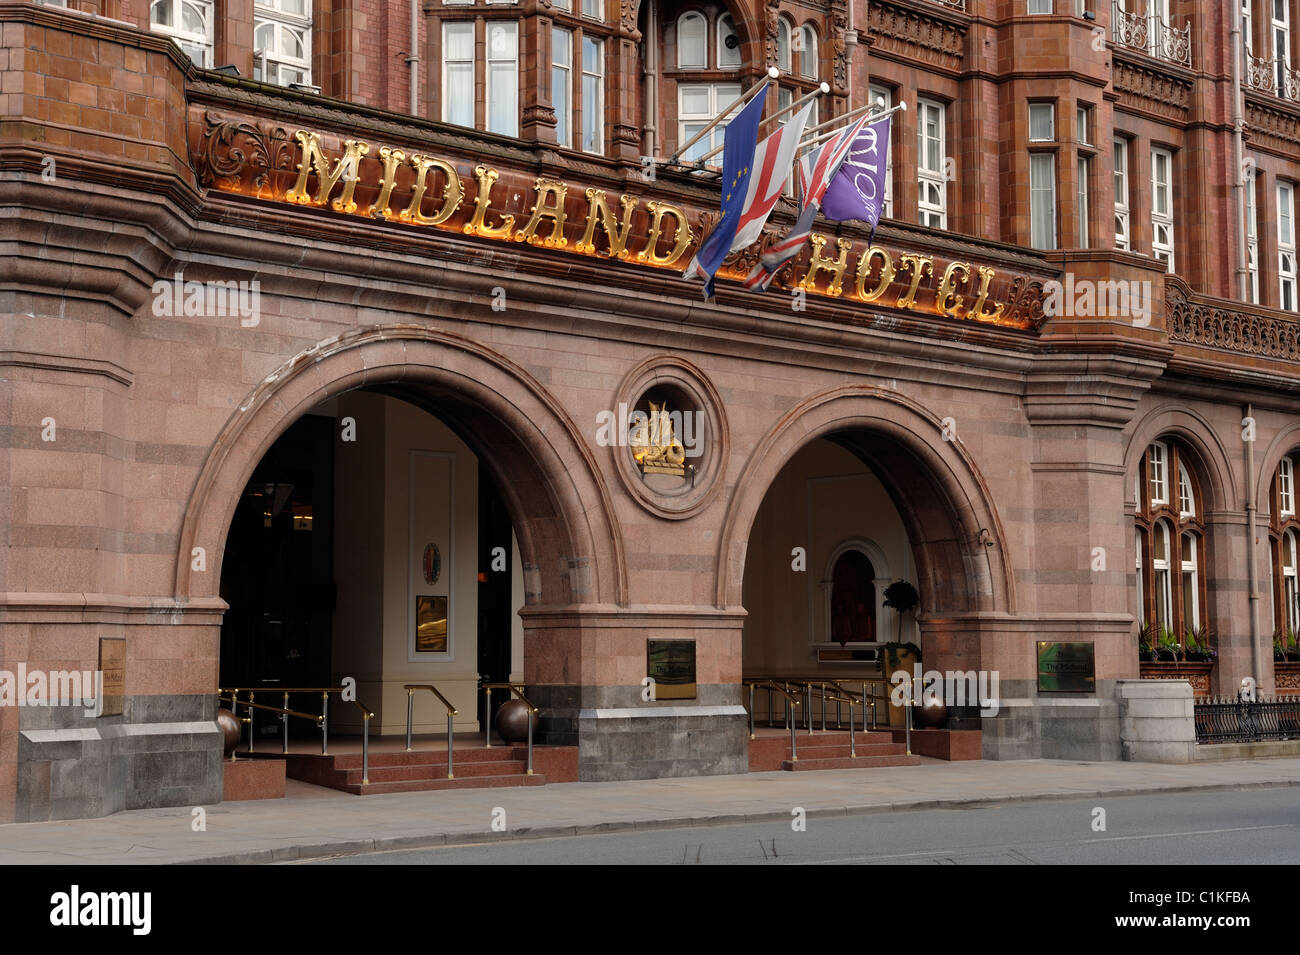 Midland Hotel Manchester Foto Stock